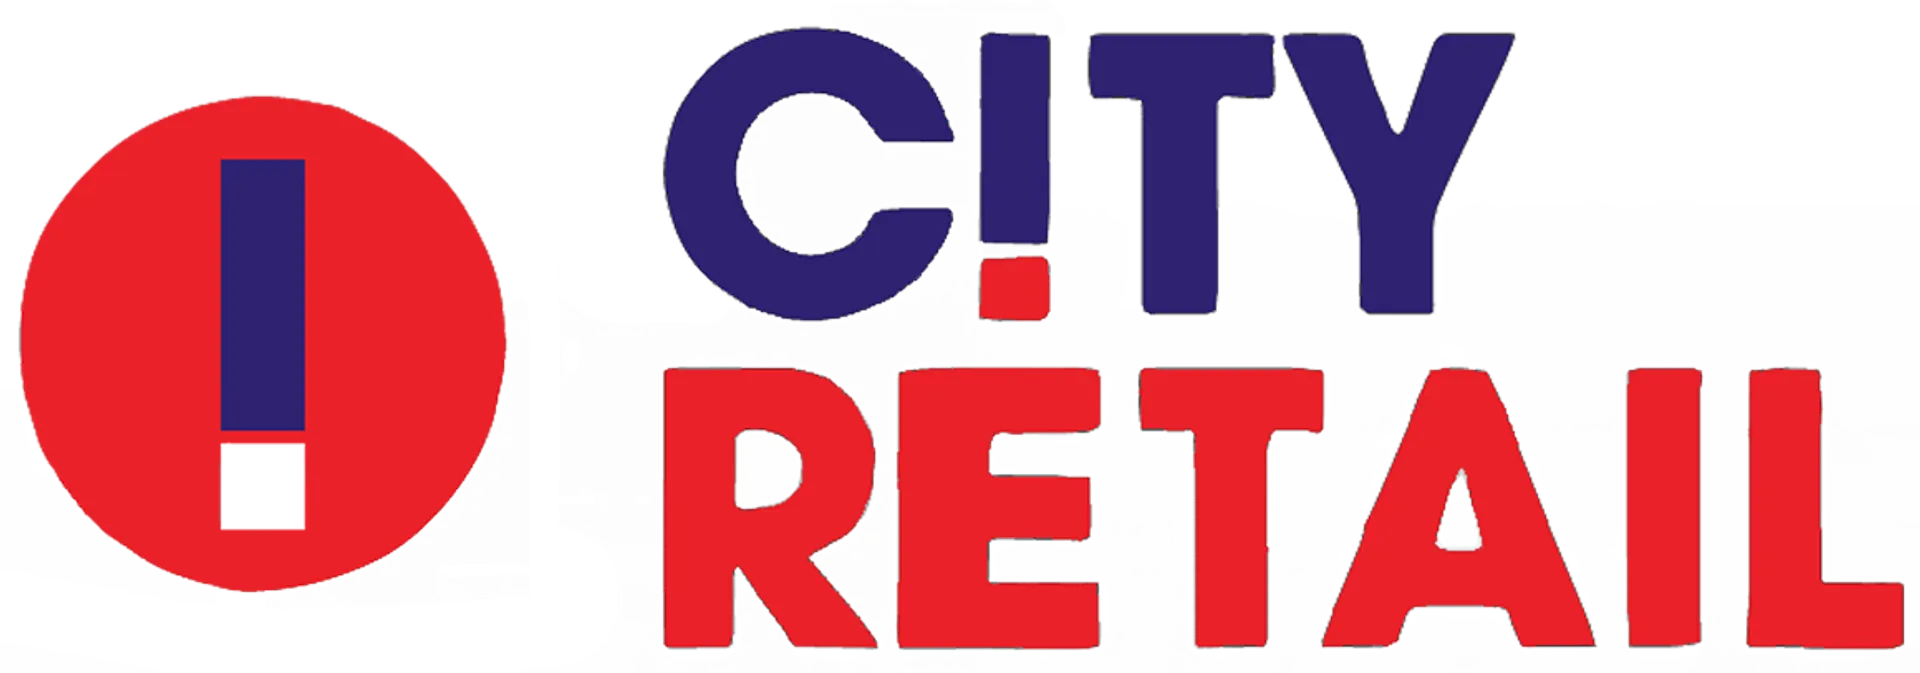 CITY RETAIL SUPERMARKET logo. Current catalogue